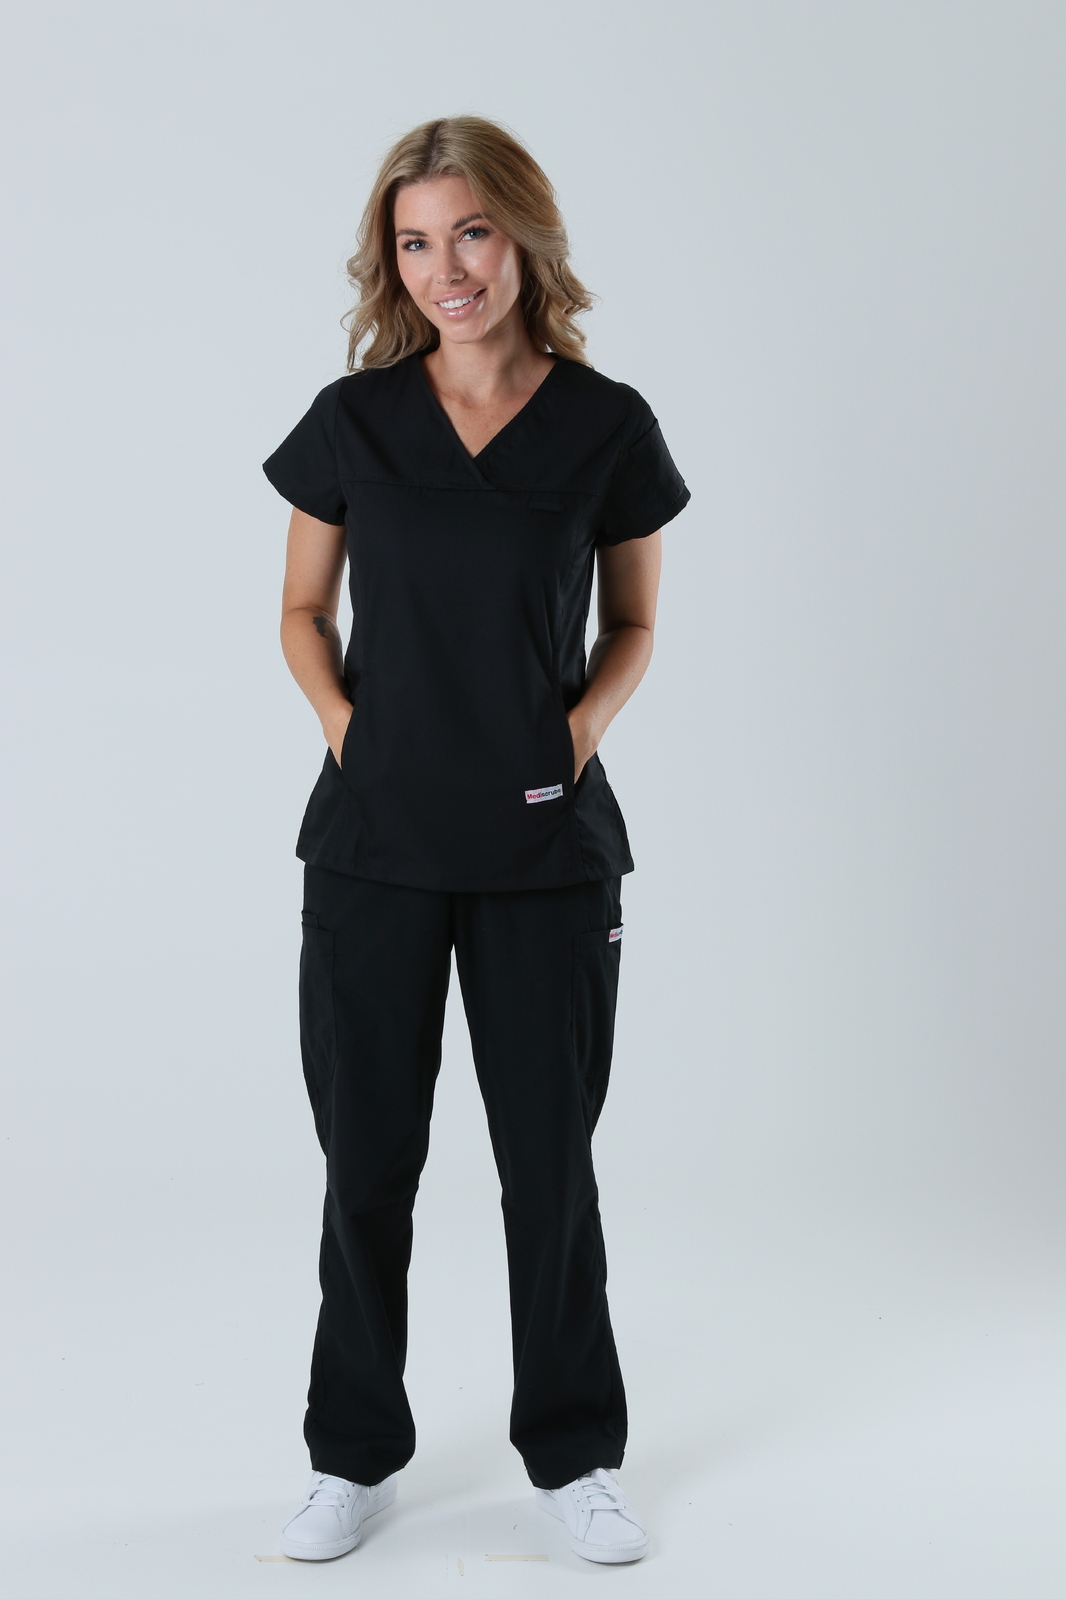 Regional Queensland Medical Officer Uniform Set Bundle (Women's Fit Solid Top and Cargo Pants in Black incl Logos)